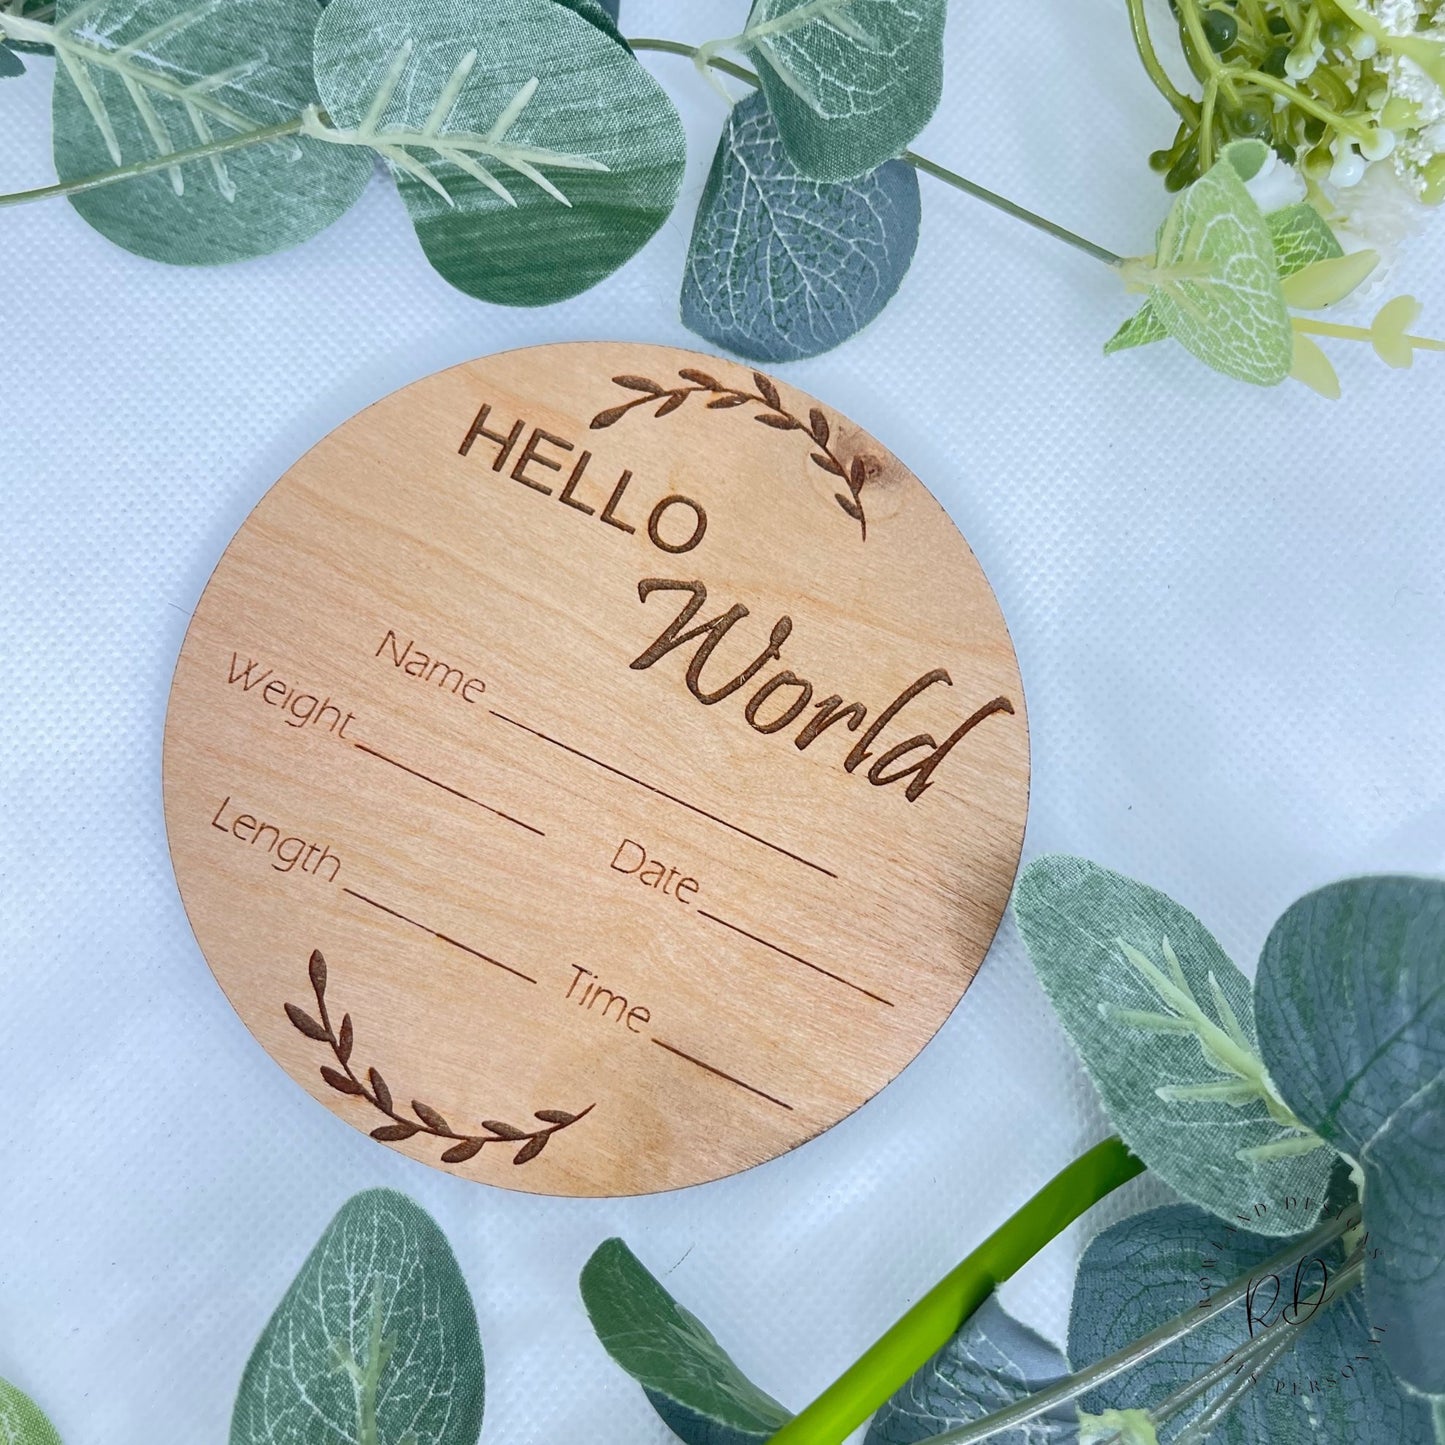 Hello World Plaque, Leaf Boho Design, Photo Prop